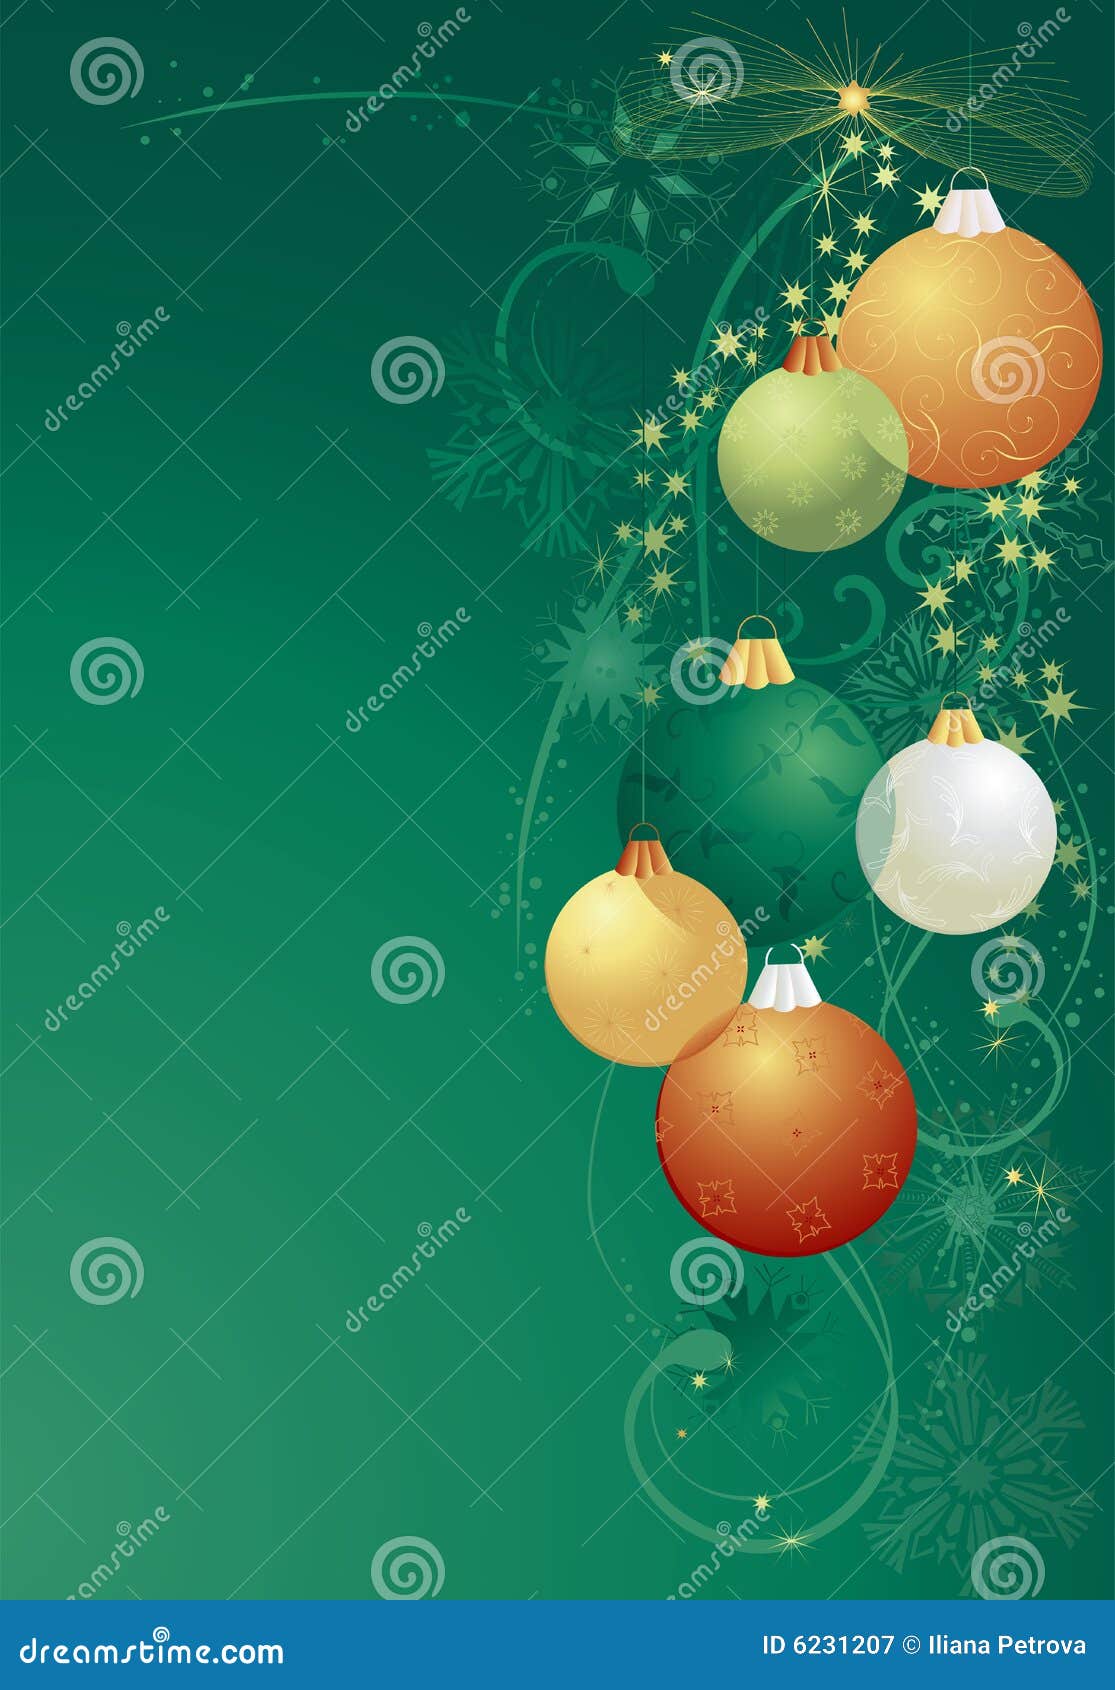 Green and Gold Christmas Balls Stock Vector - Illustration of star ...